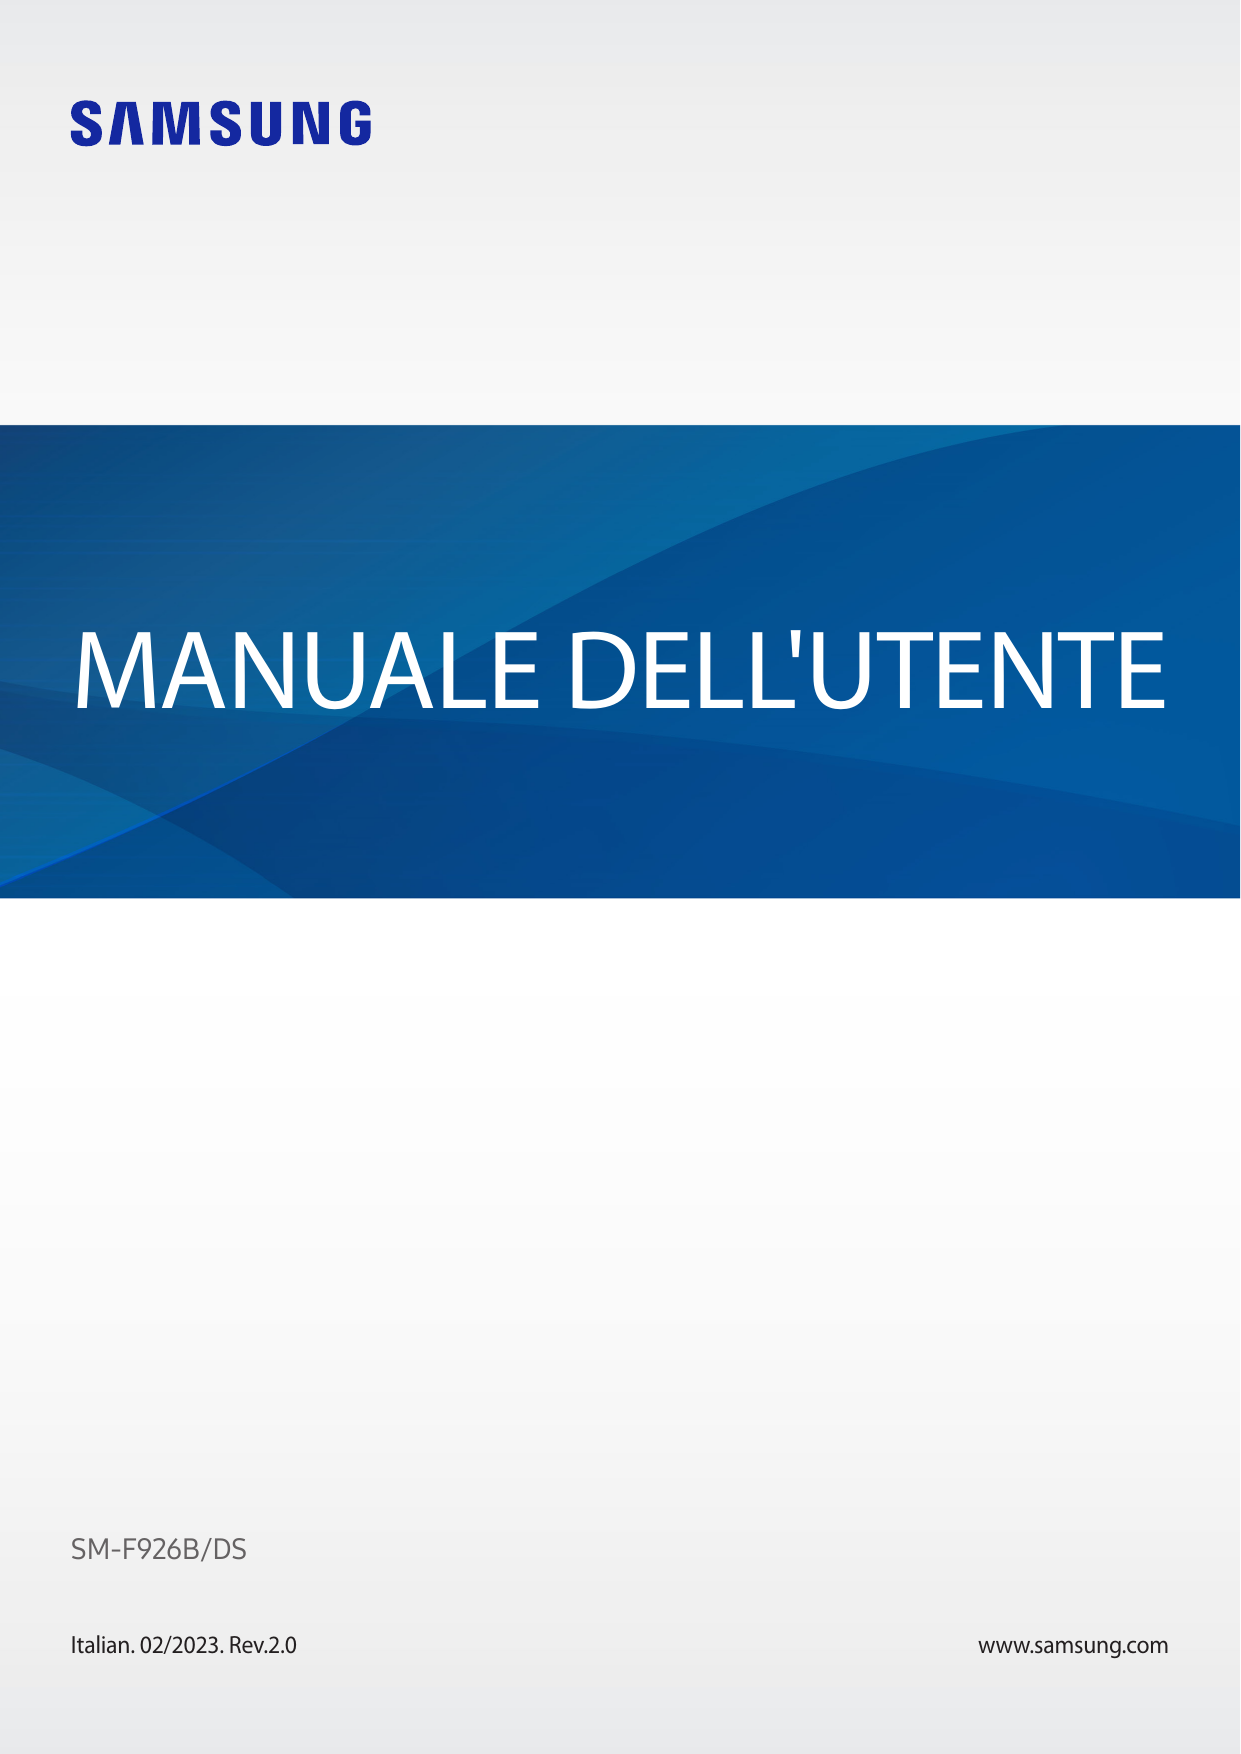 MANUALE DELL'UTENTESM-F926B/DSItalian. 02/2023. Rev.2.0www.samsung.com